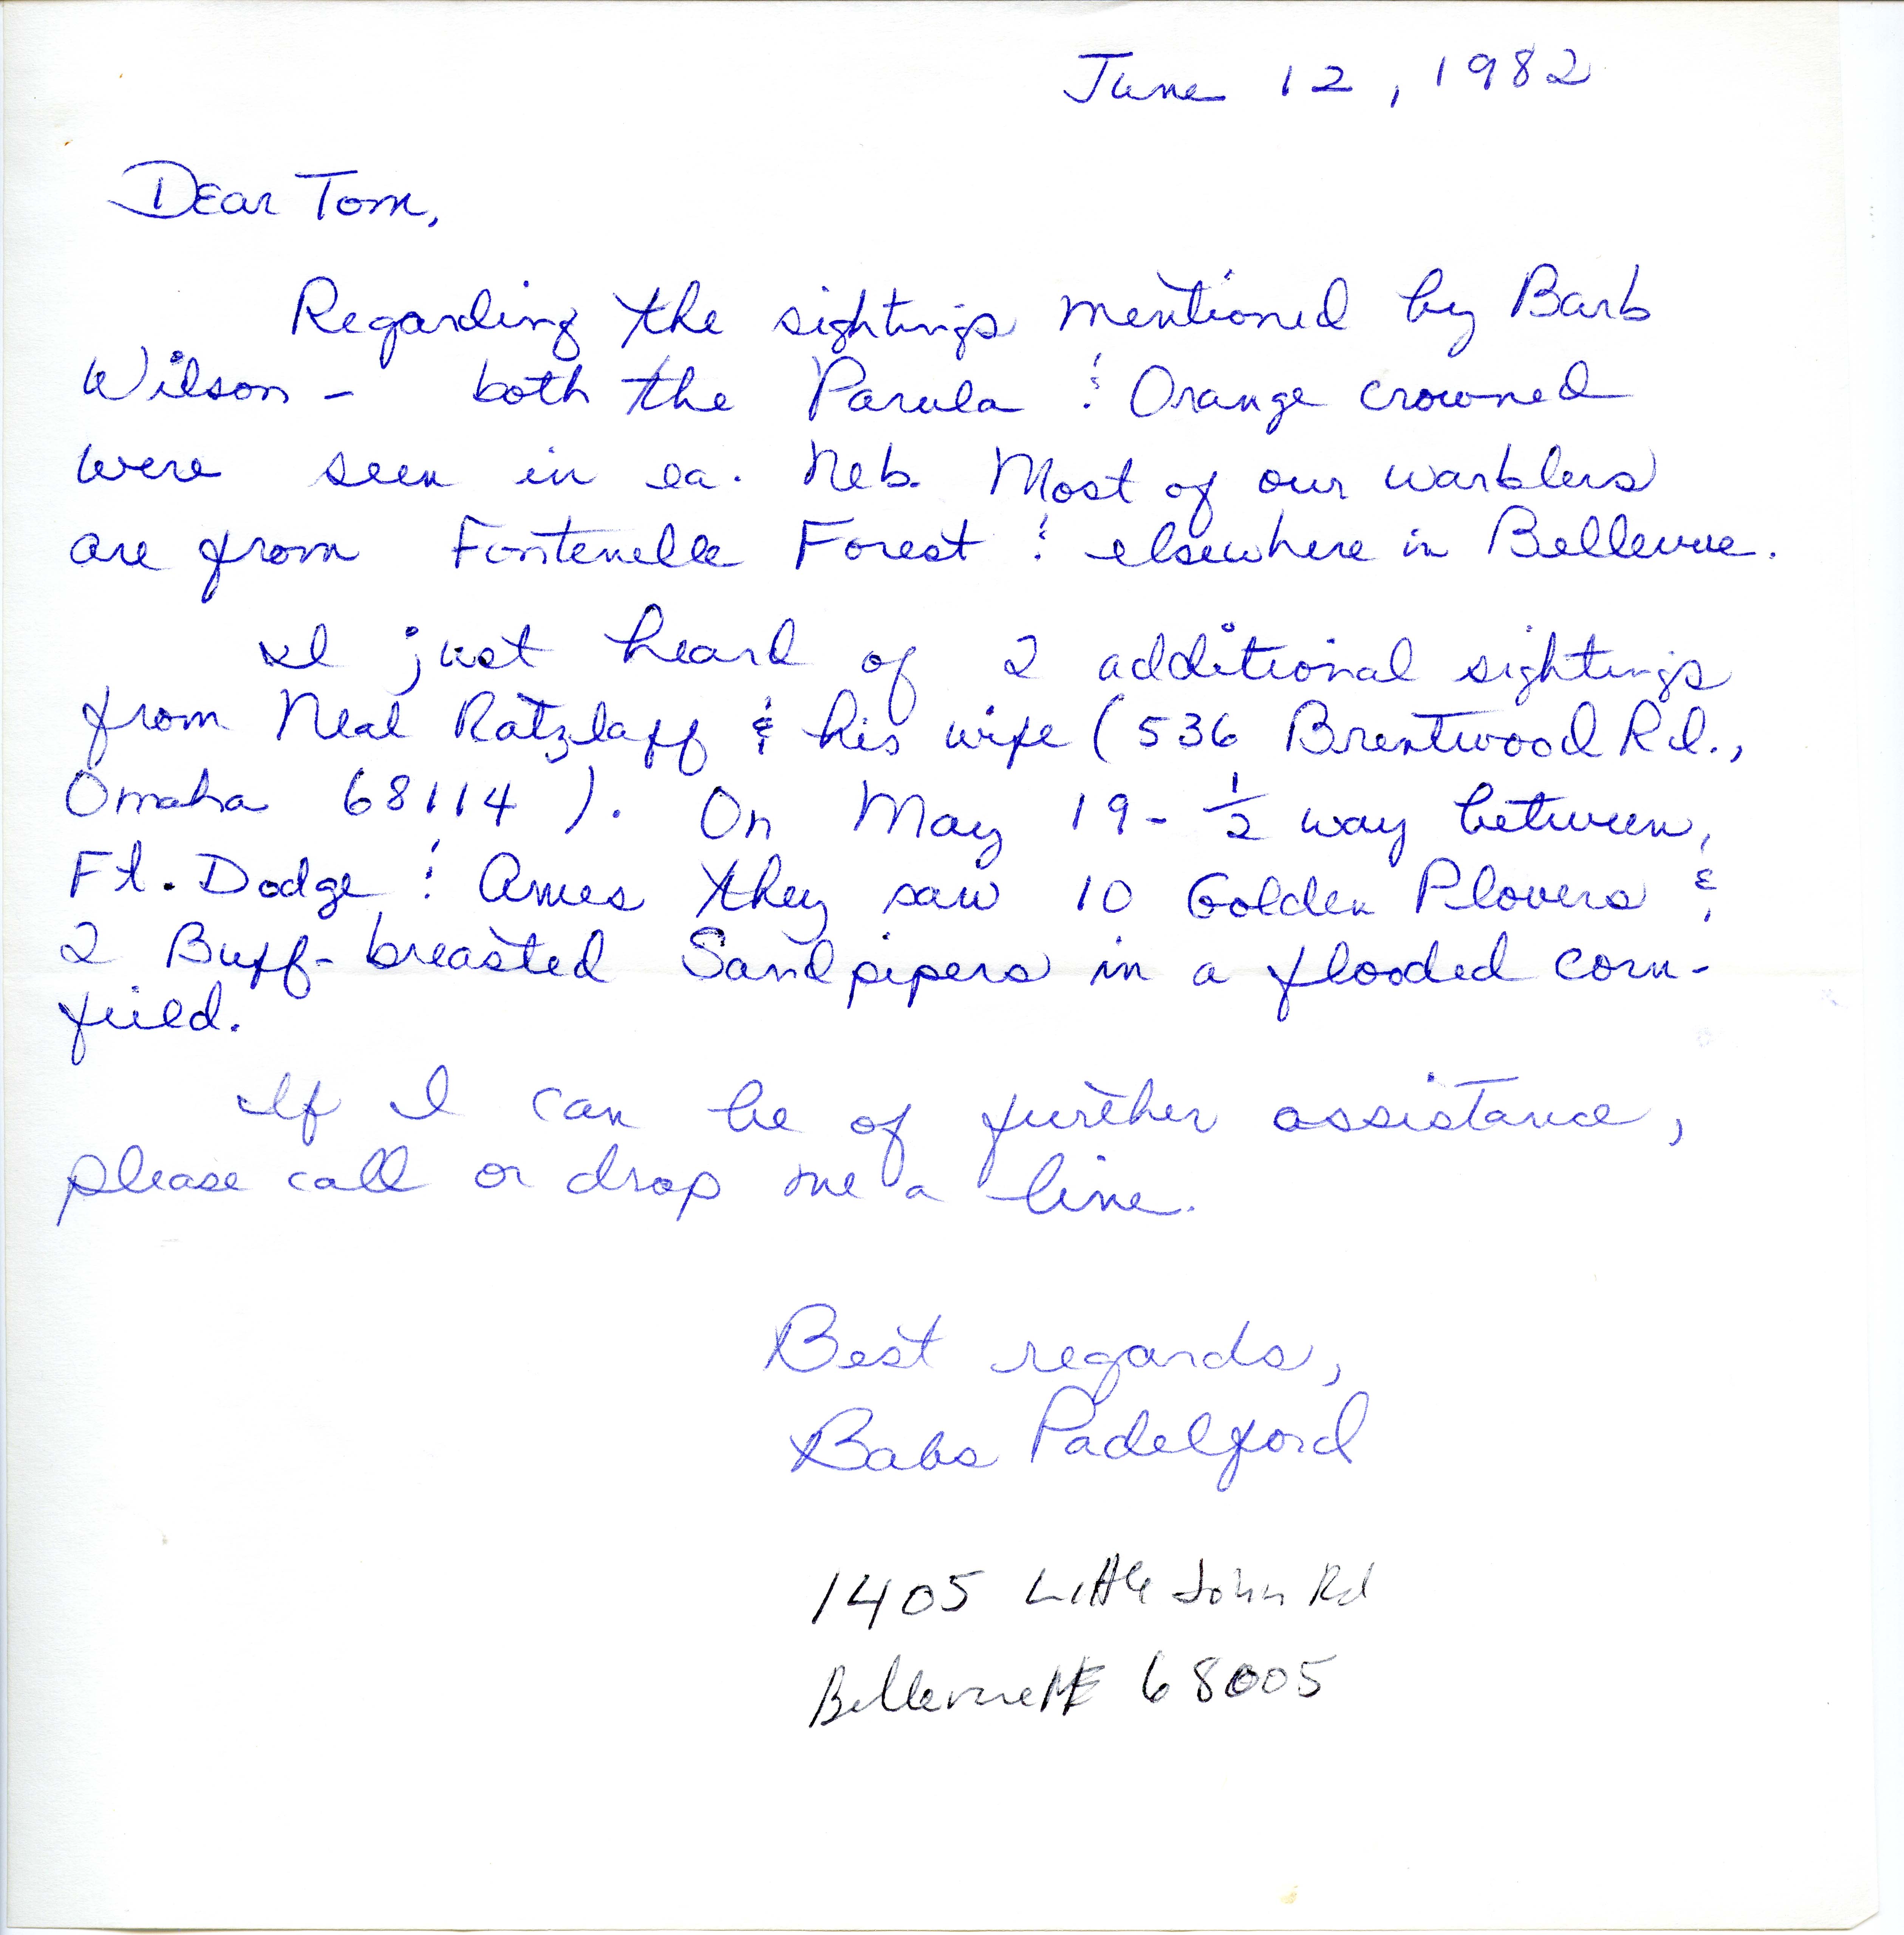 Babs Padelford letter to Thomas H. Kent regarding field notes, June 12, 1982